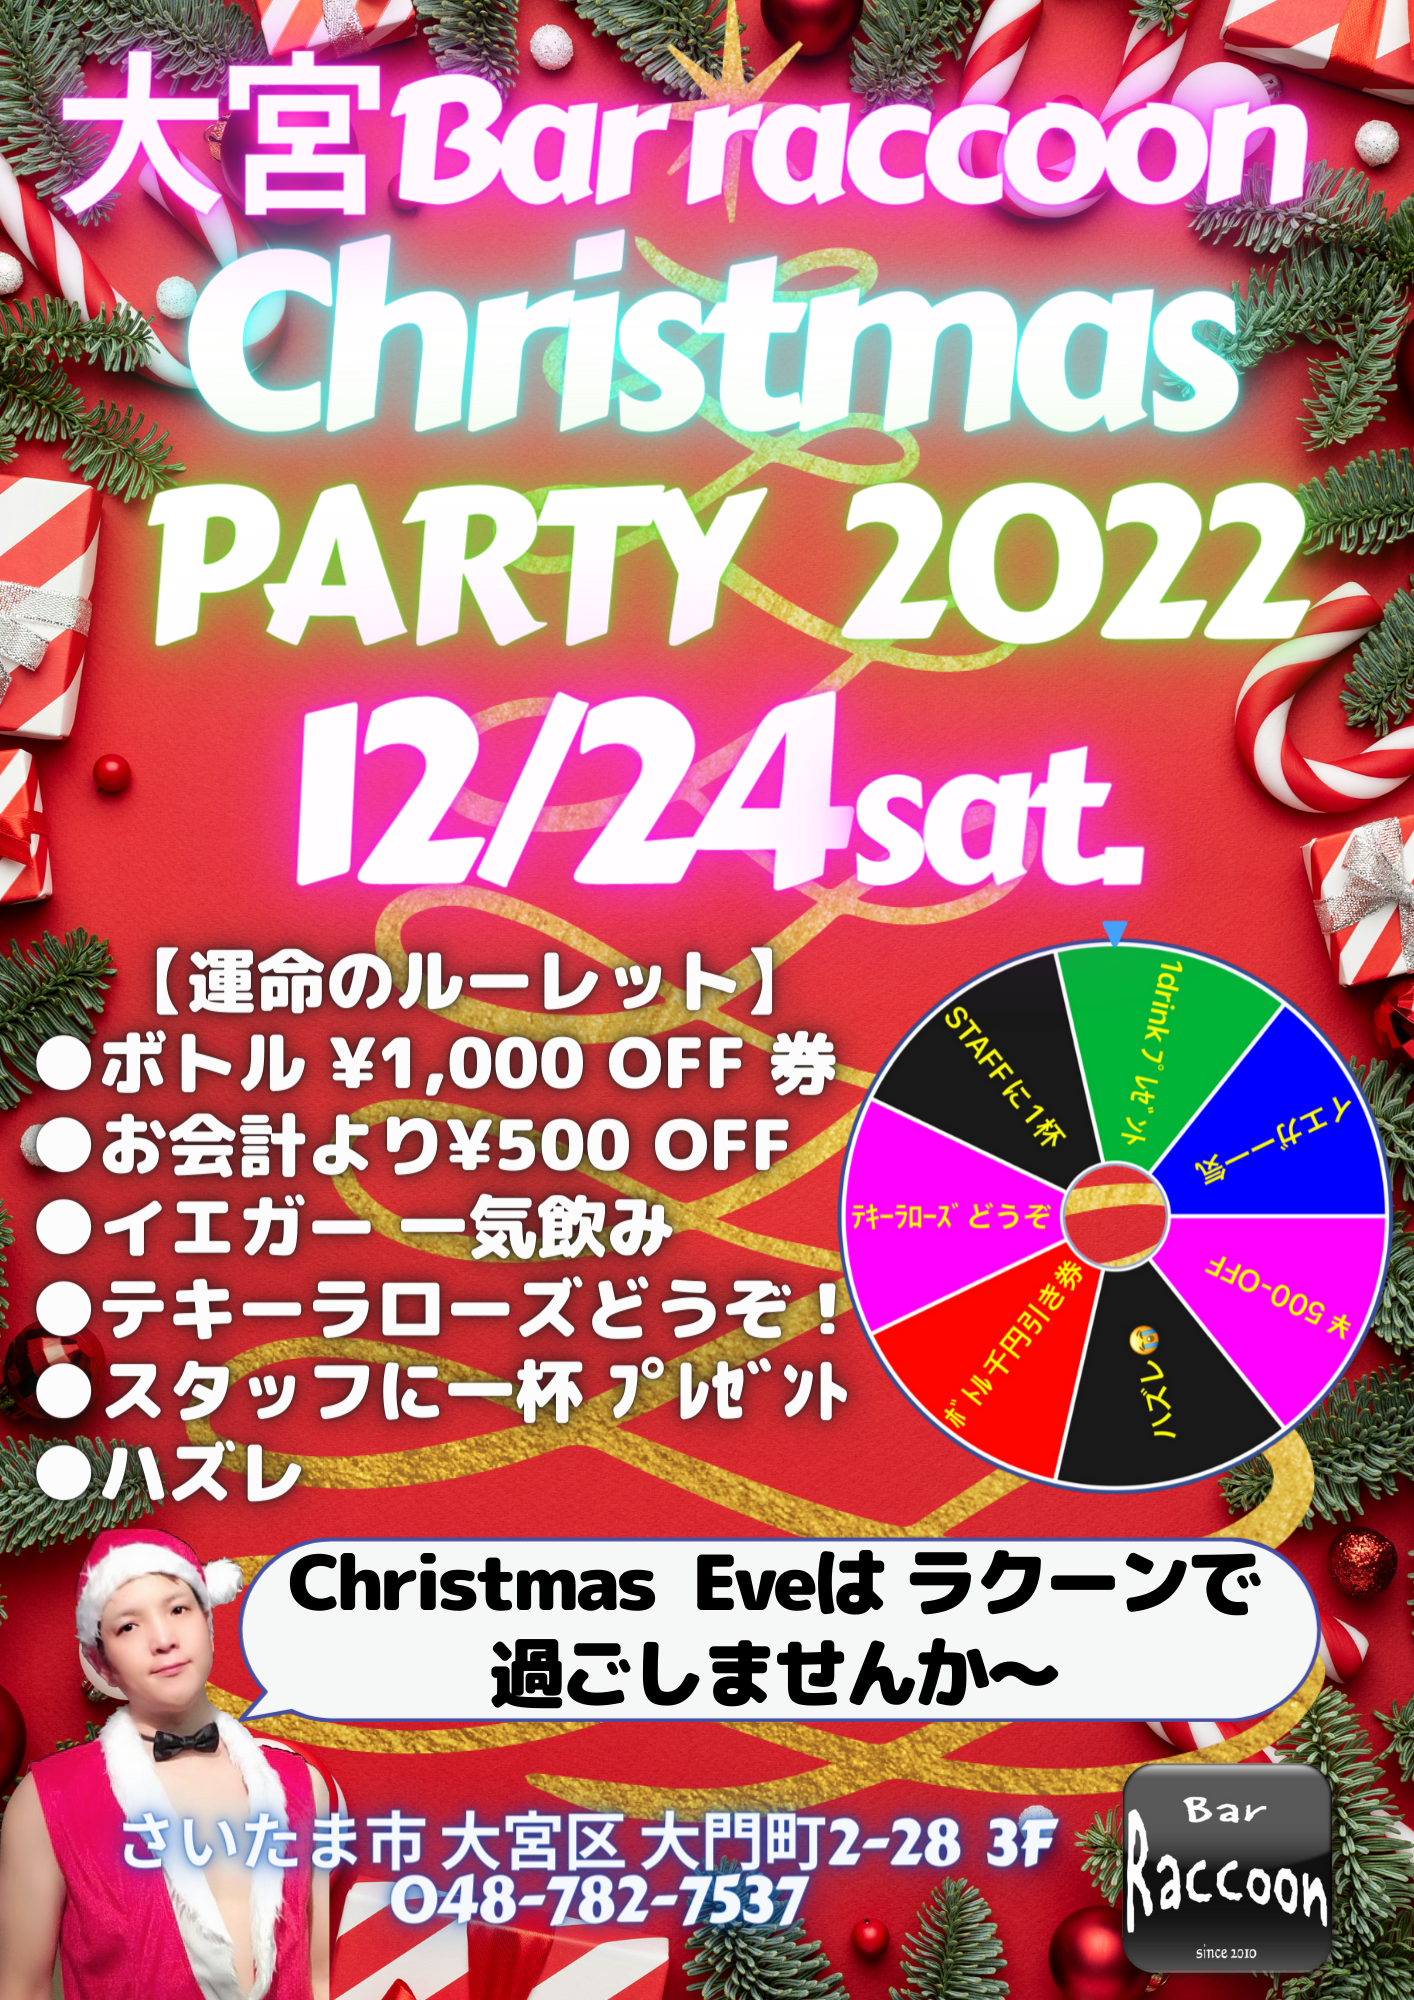 Christmas Party 2022 in 大宮 Bar Raccoon